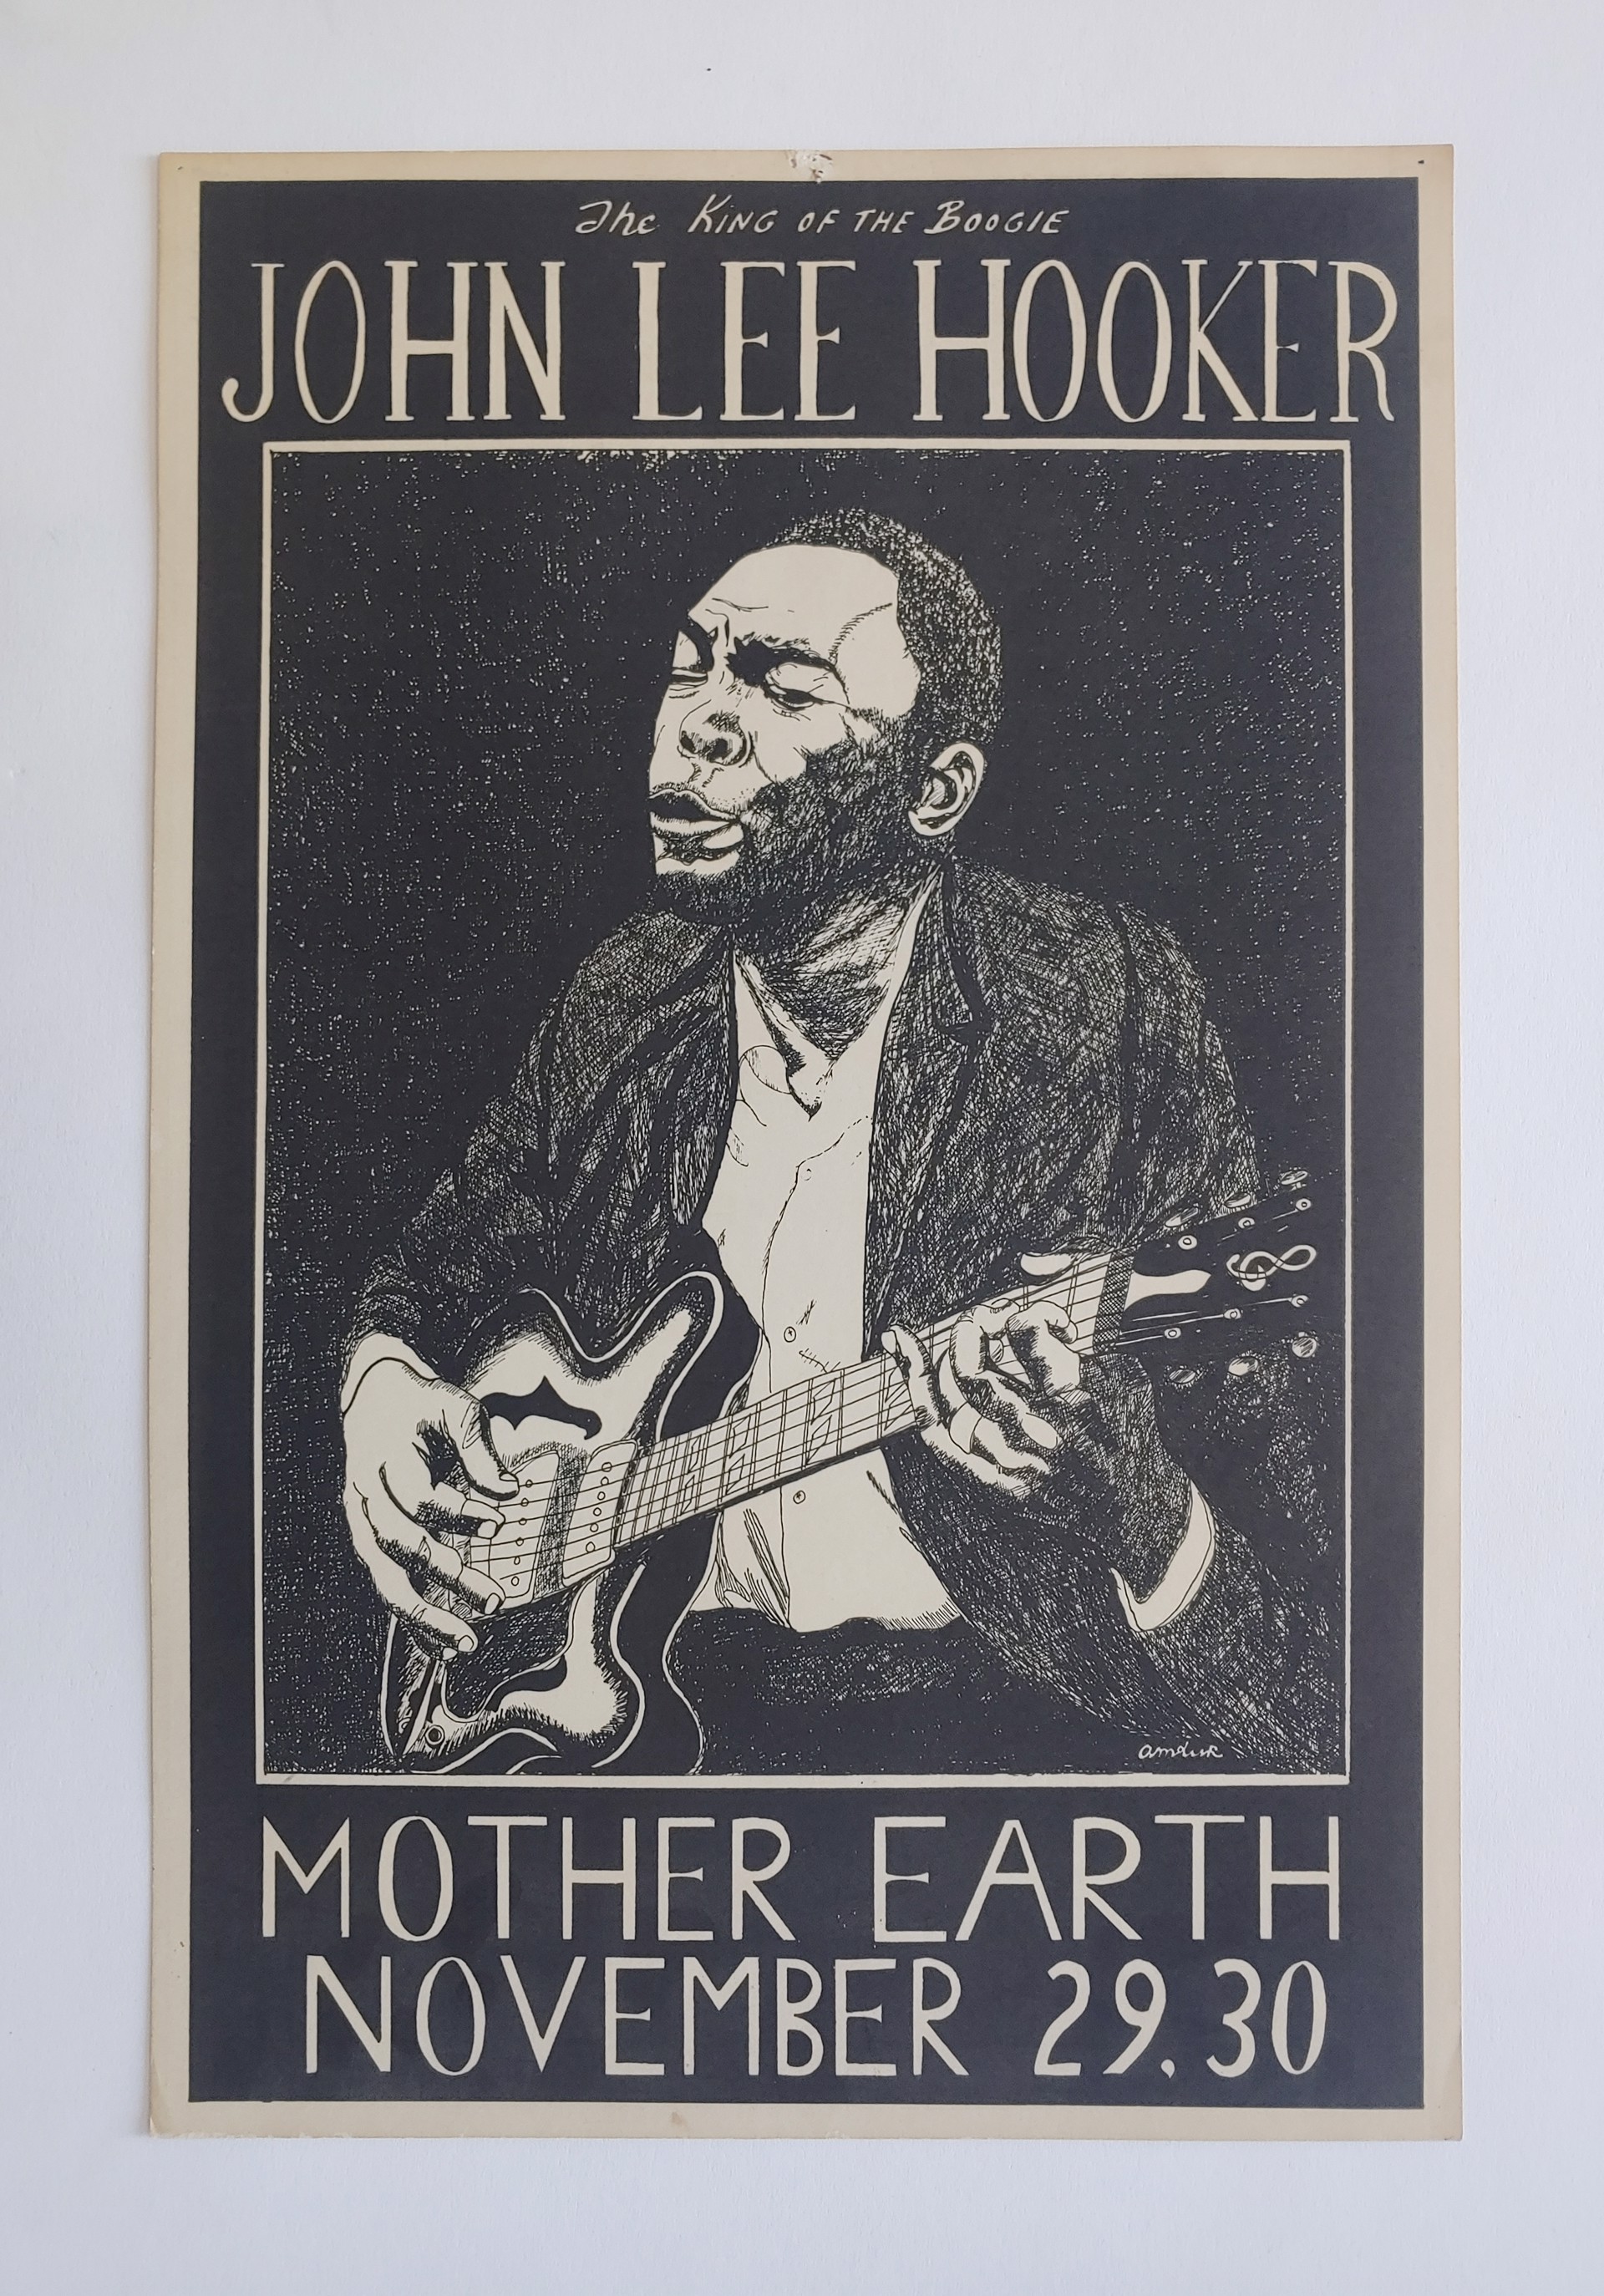 John Lee Hooker - Poster #2 by David Amdur